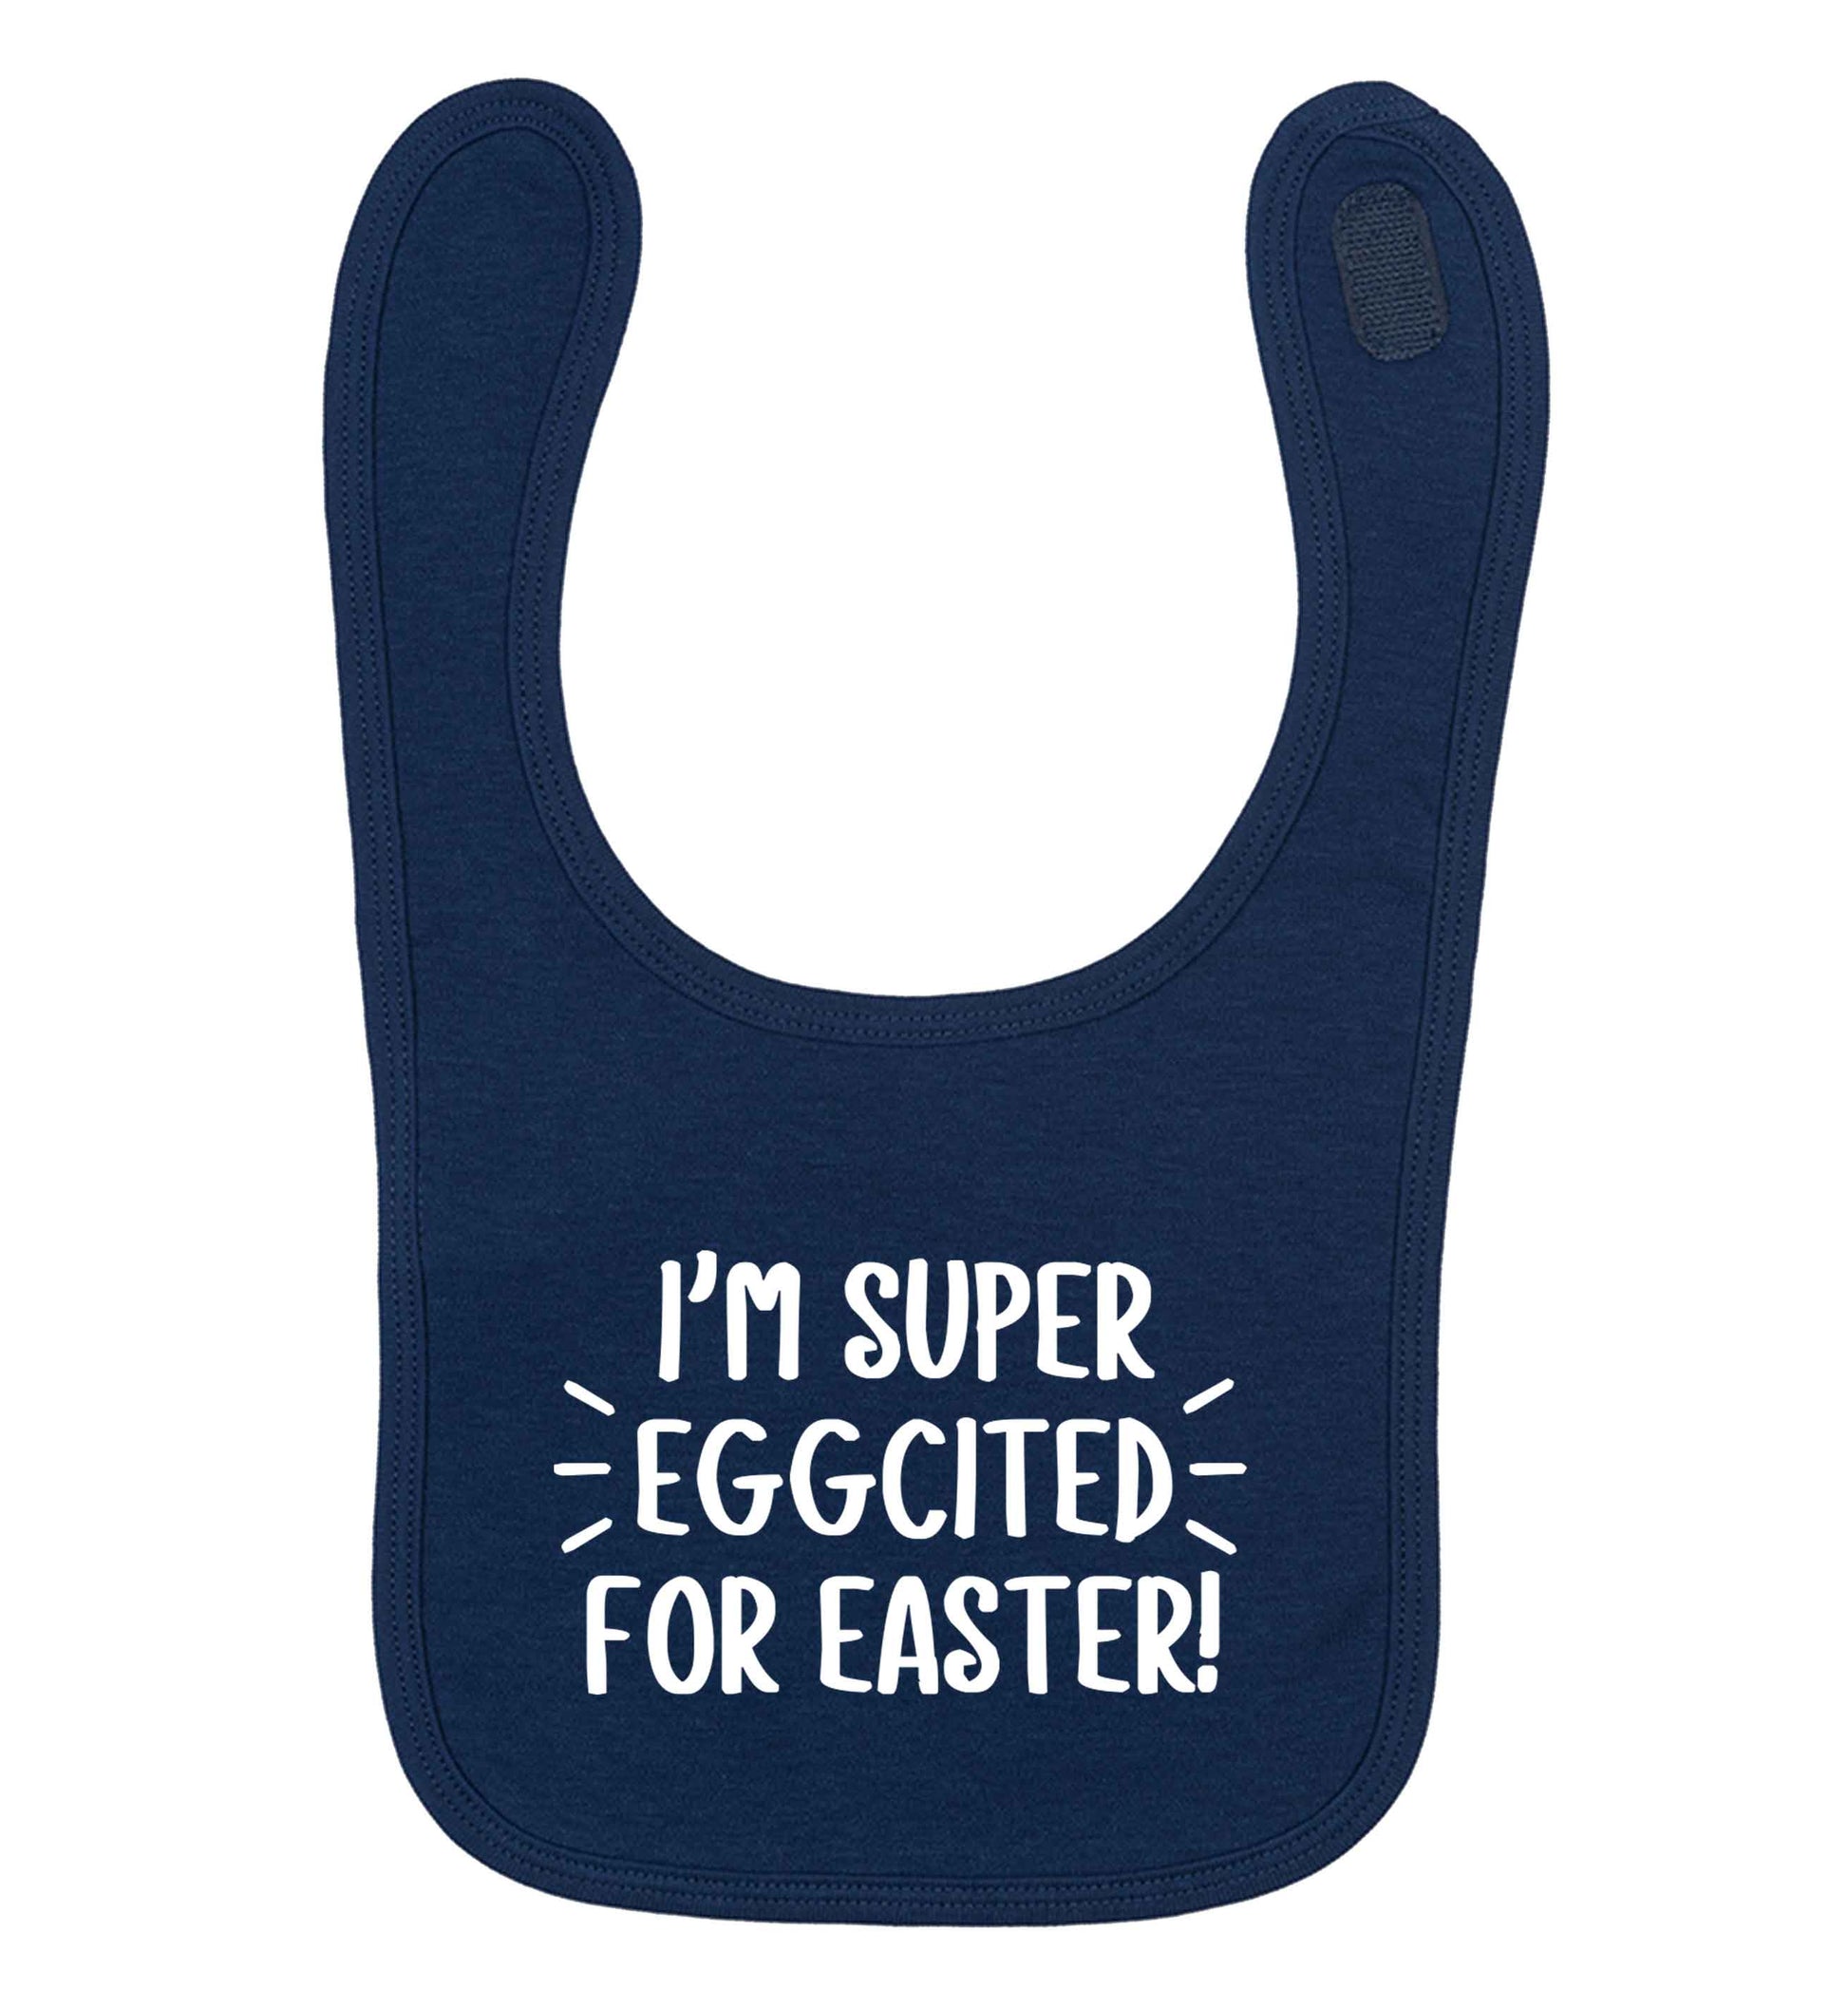 I'm super eggcited for Easter navy baby bib